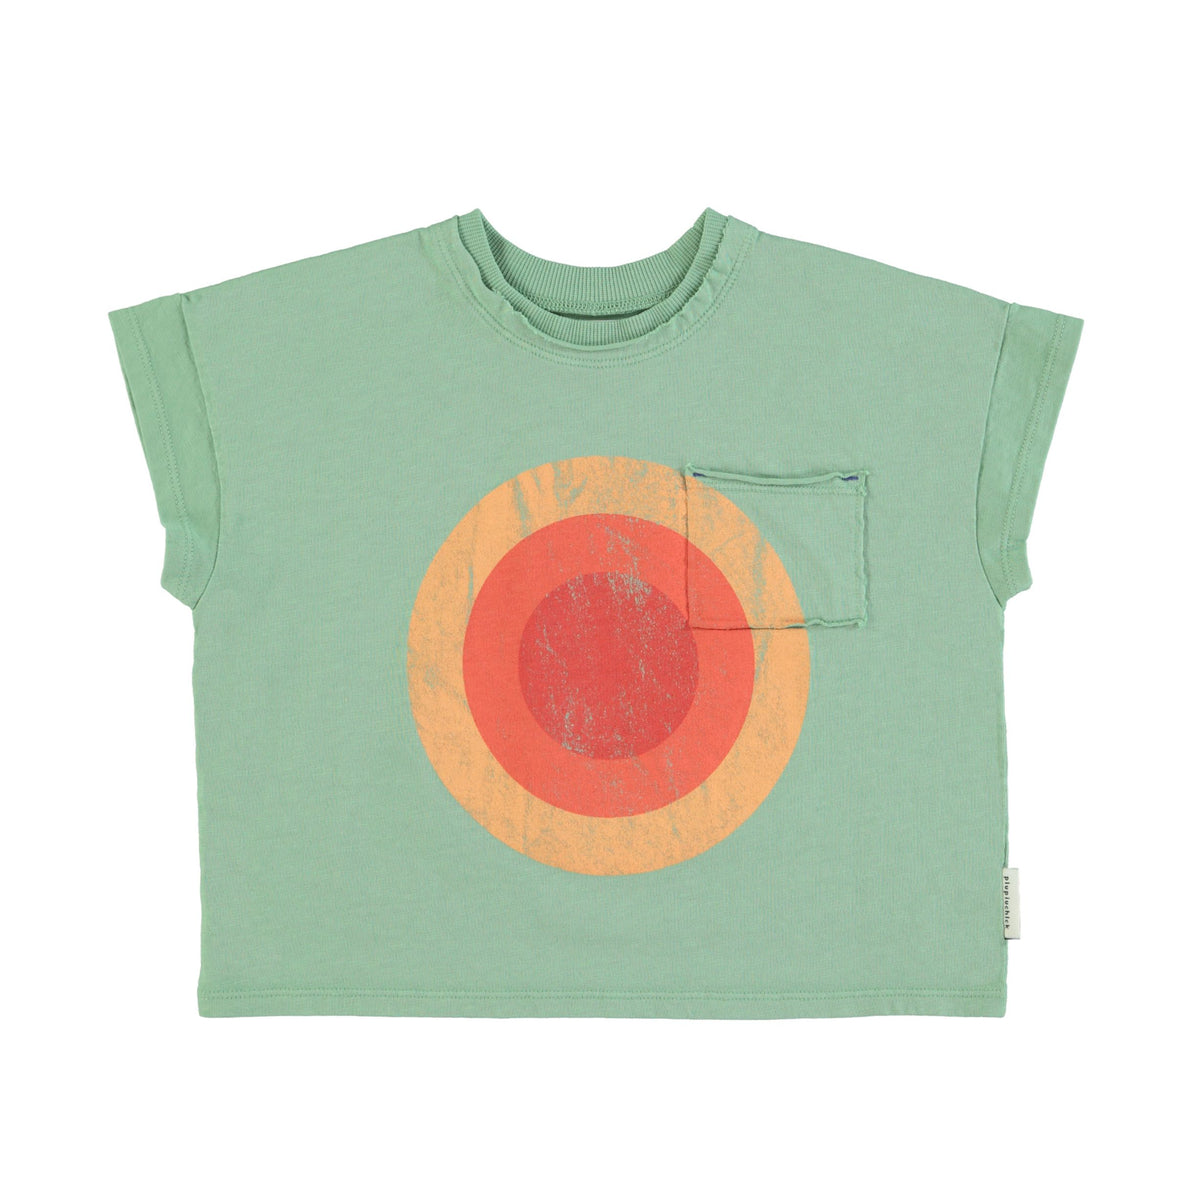 piupiuchick t shirt - green with circle print